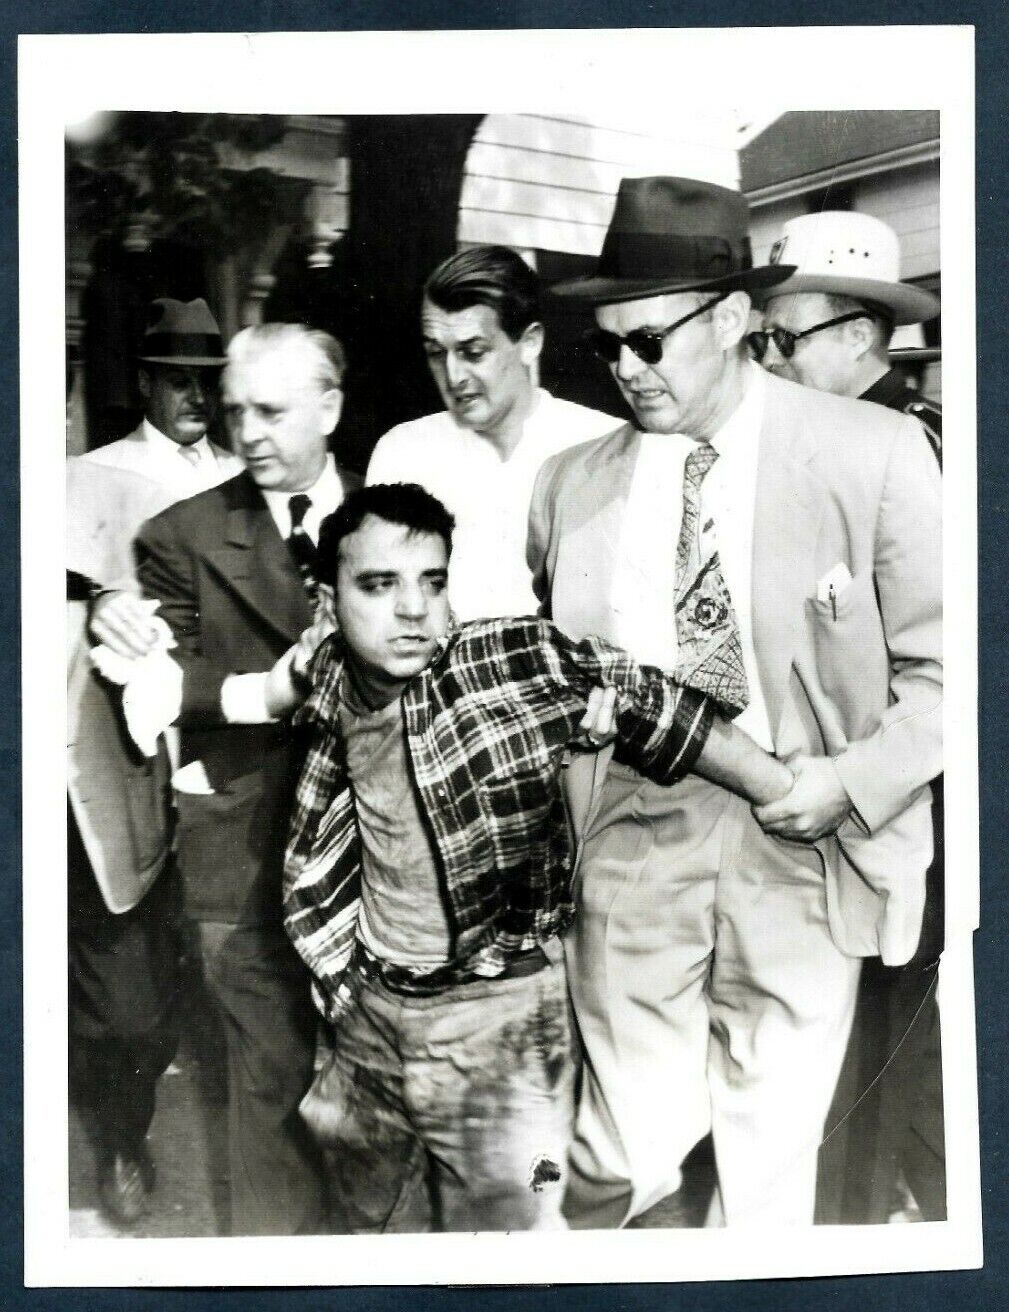 HORROR CRIMINAL UNDER POLICE CUSTODY AFTER STREET SHOOTING 1940s Photo Y 202